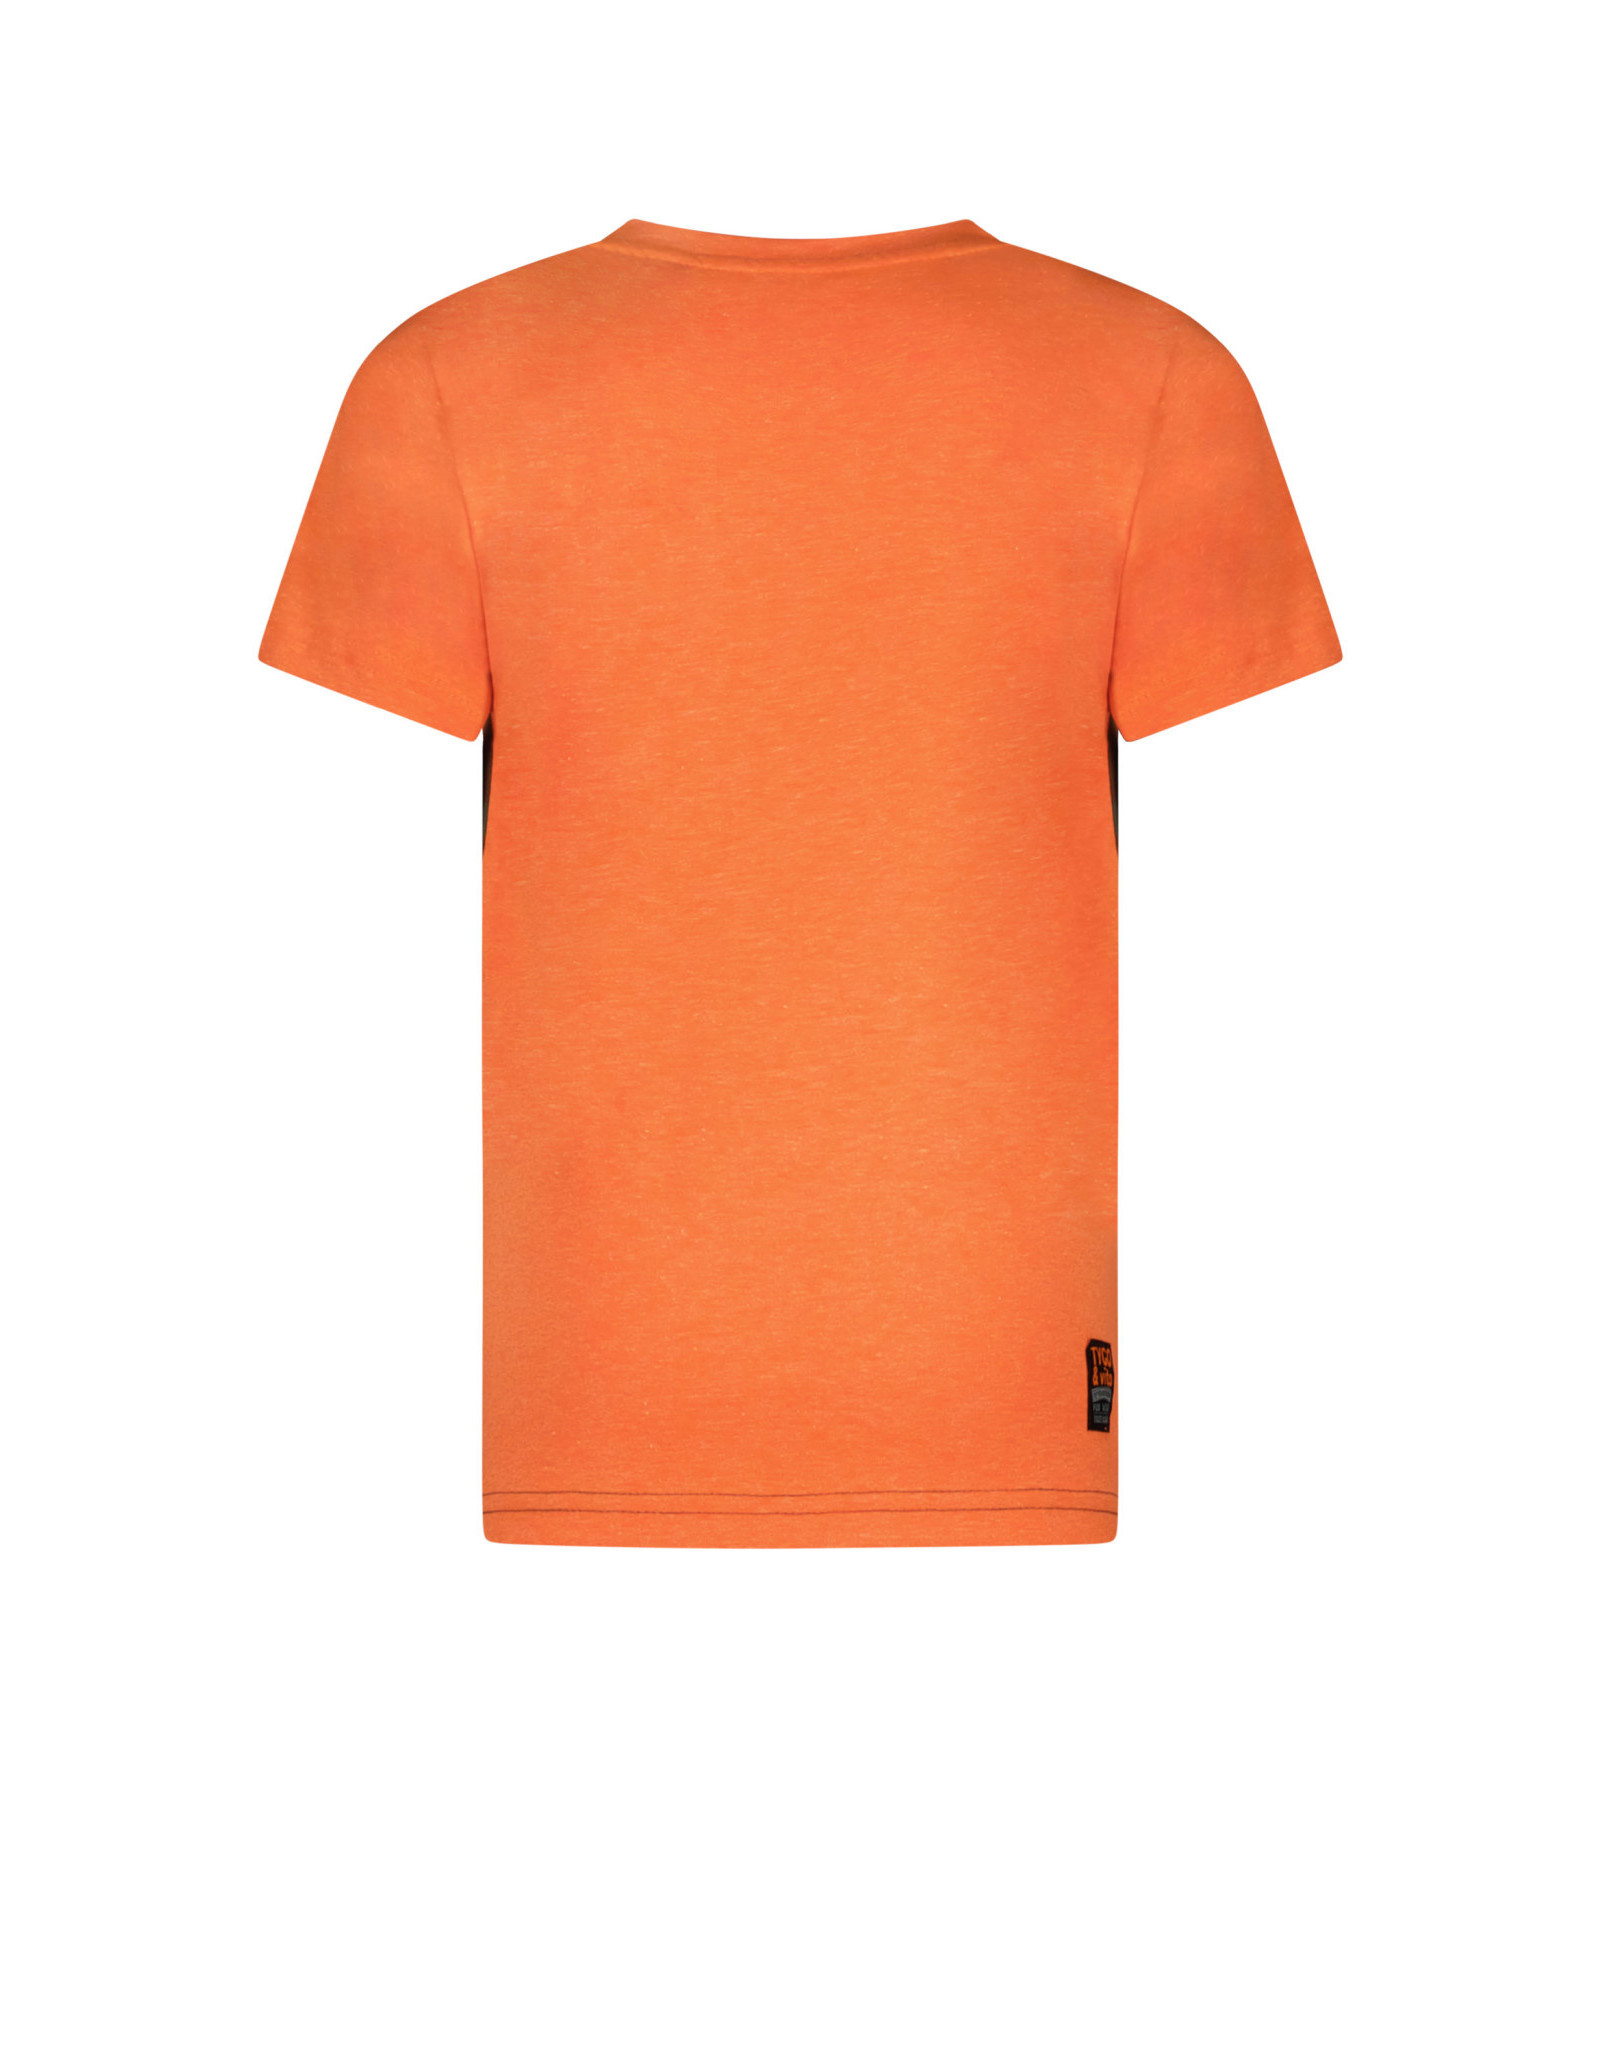 Tygo & vito T-shirt Colorblock Camo Orange Clownfish